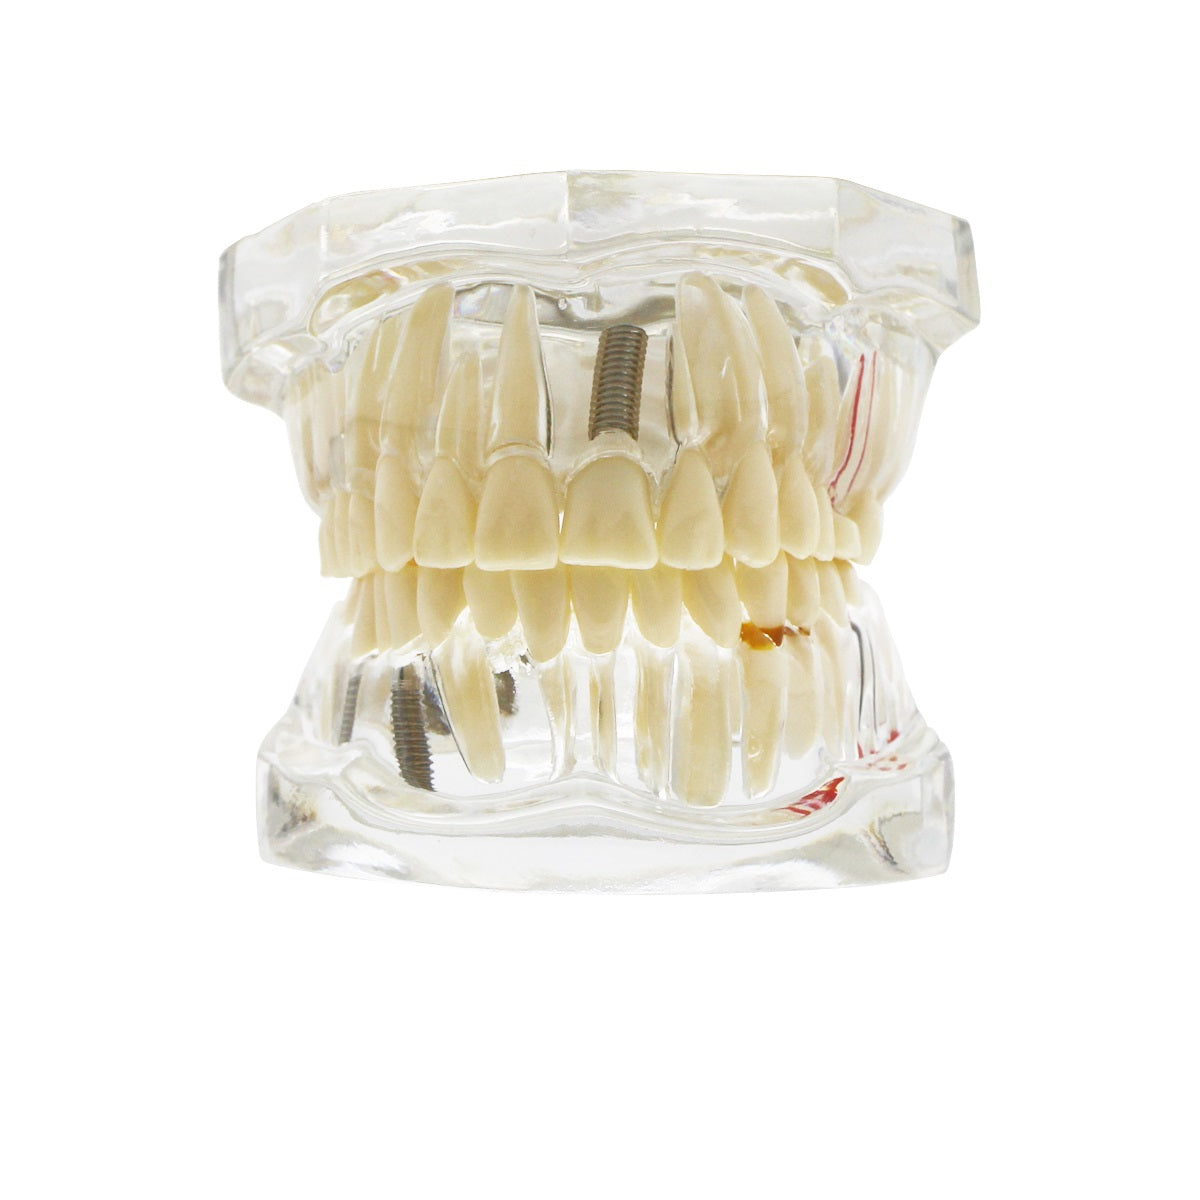 Dental Teeth Model,Transparent Dental Implant Teeth Model Dentist Standard Disease Removable Tooth Pathological Teaching Model